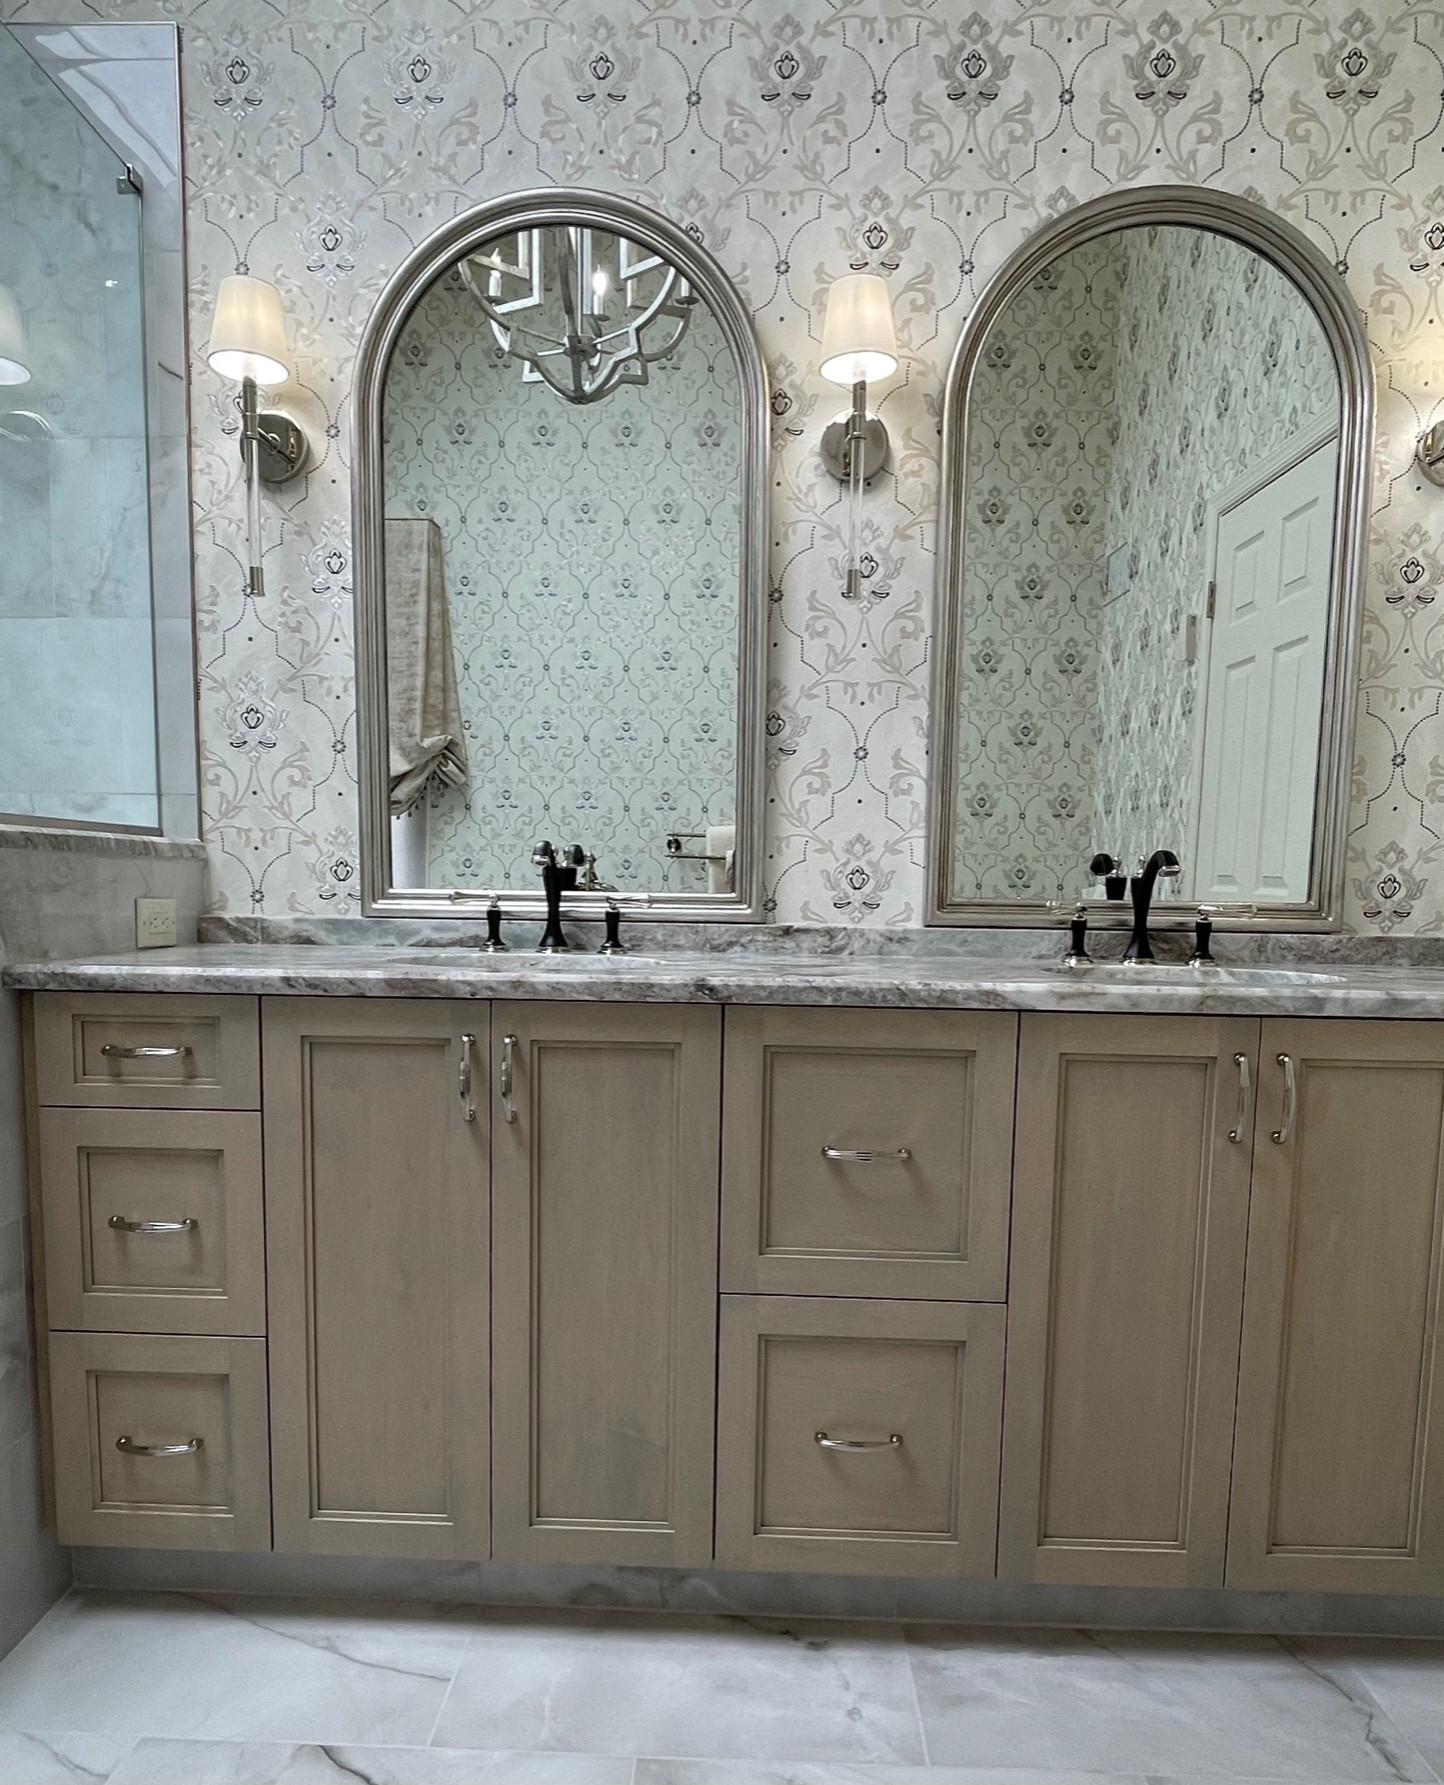 Bathroom renovation-Yardley, PA